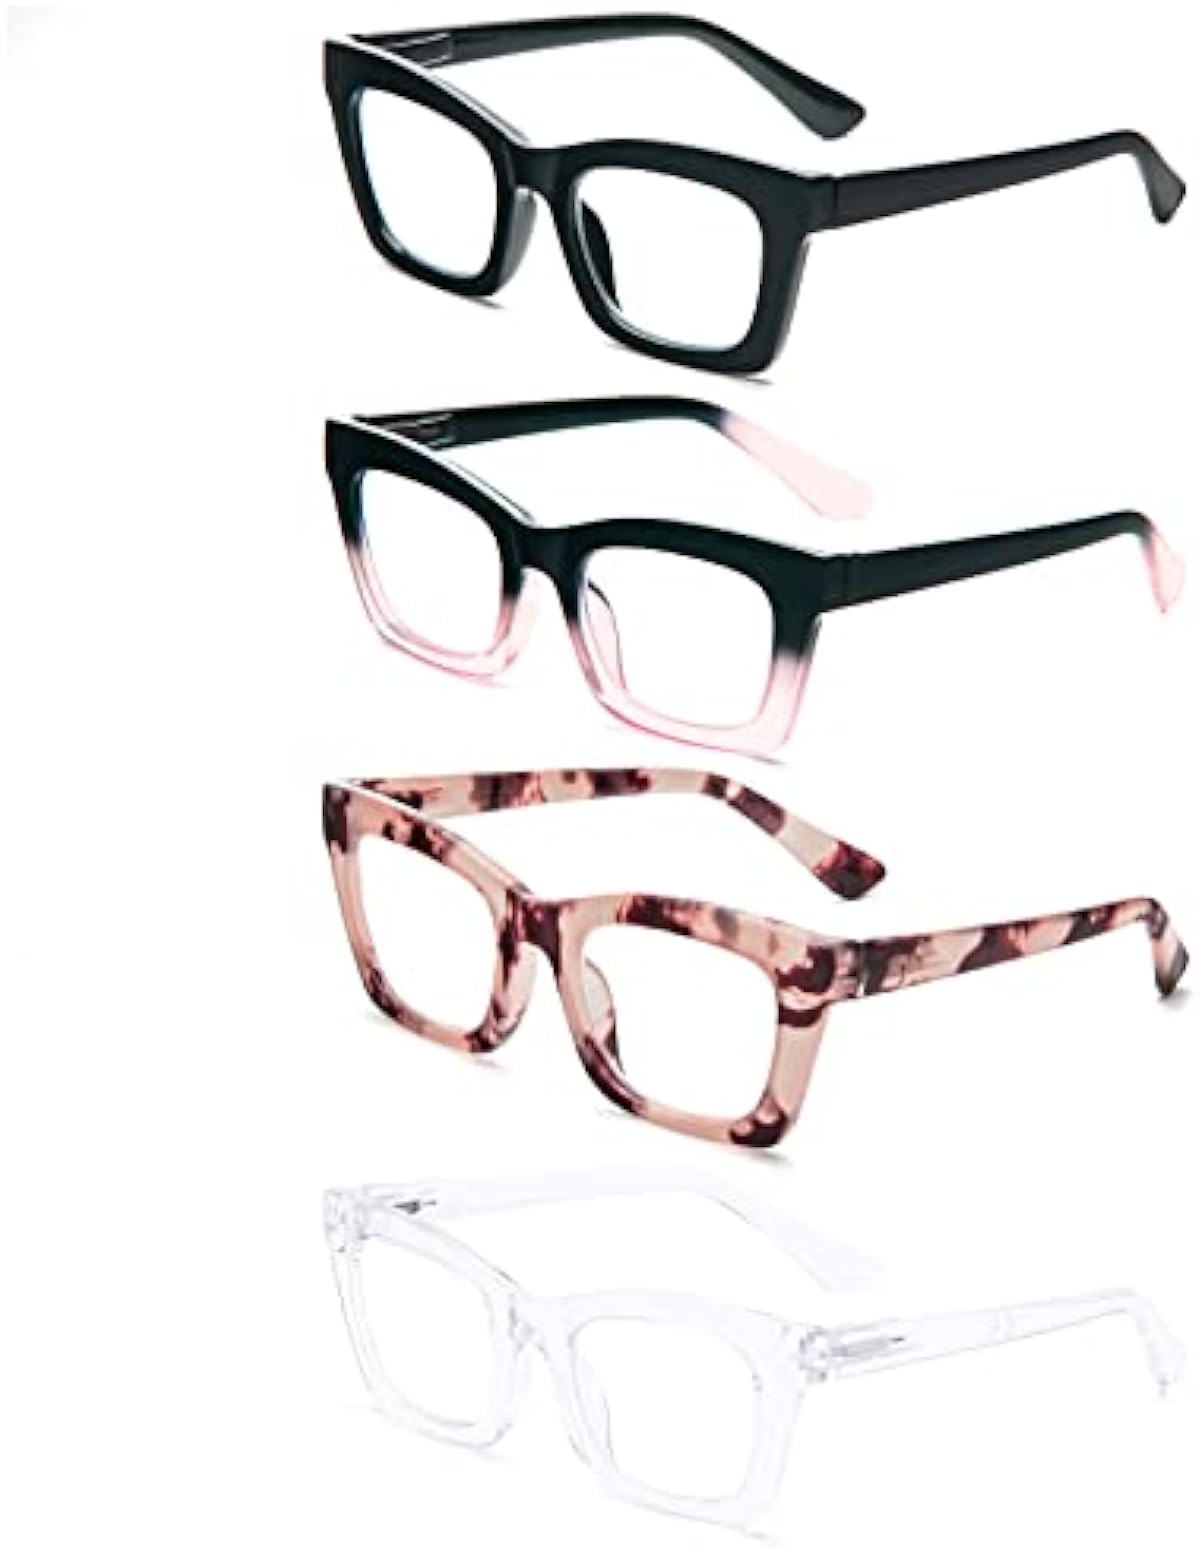 PRTCSLWD 4 Pack Reading Glasses for Women Oprah Style Oversized Square Spring Hinge Blue Light Blocking Glasses